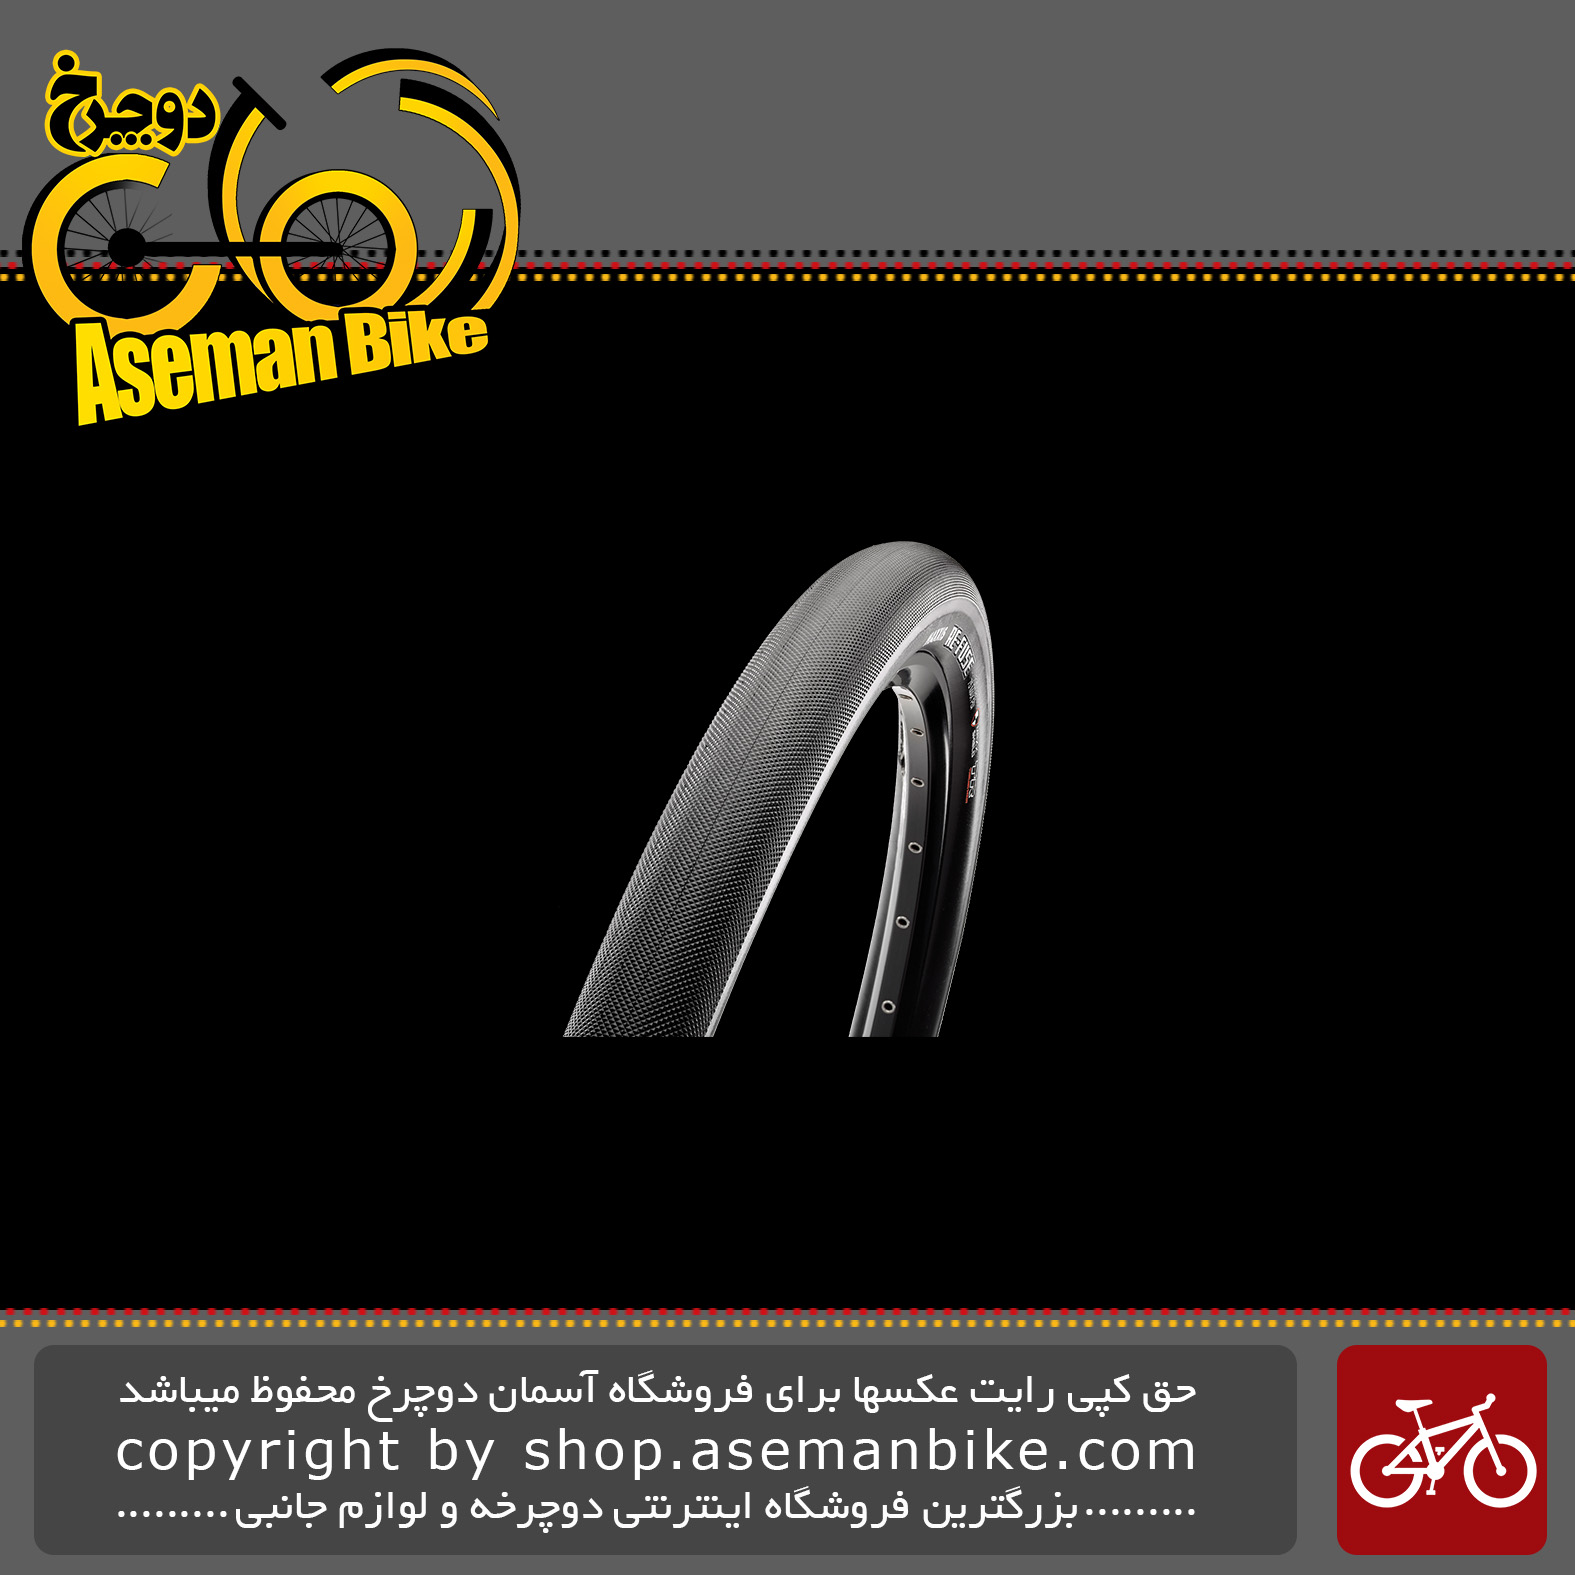 لاستیک دوچرخه مکسیس مدل ری-فوس Maxxis Adventure-gravel Bicycle Tire Re-Fuse 27.5X2.00